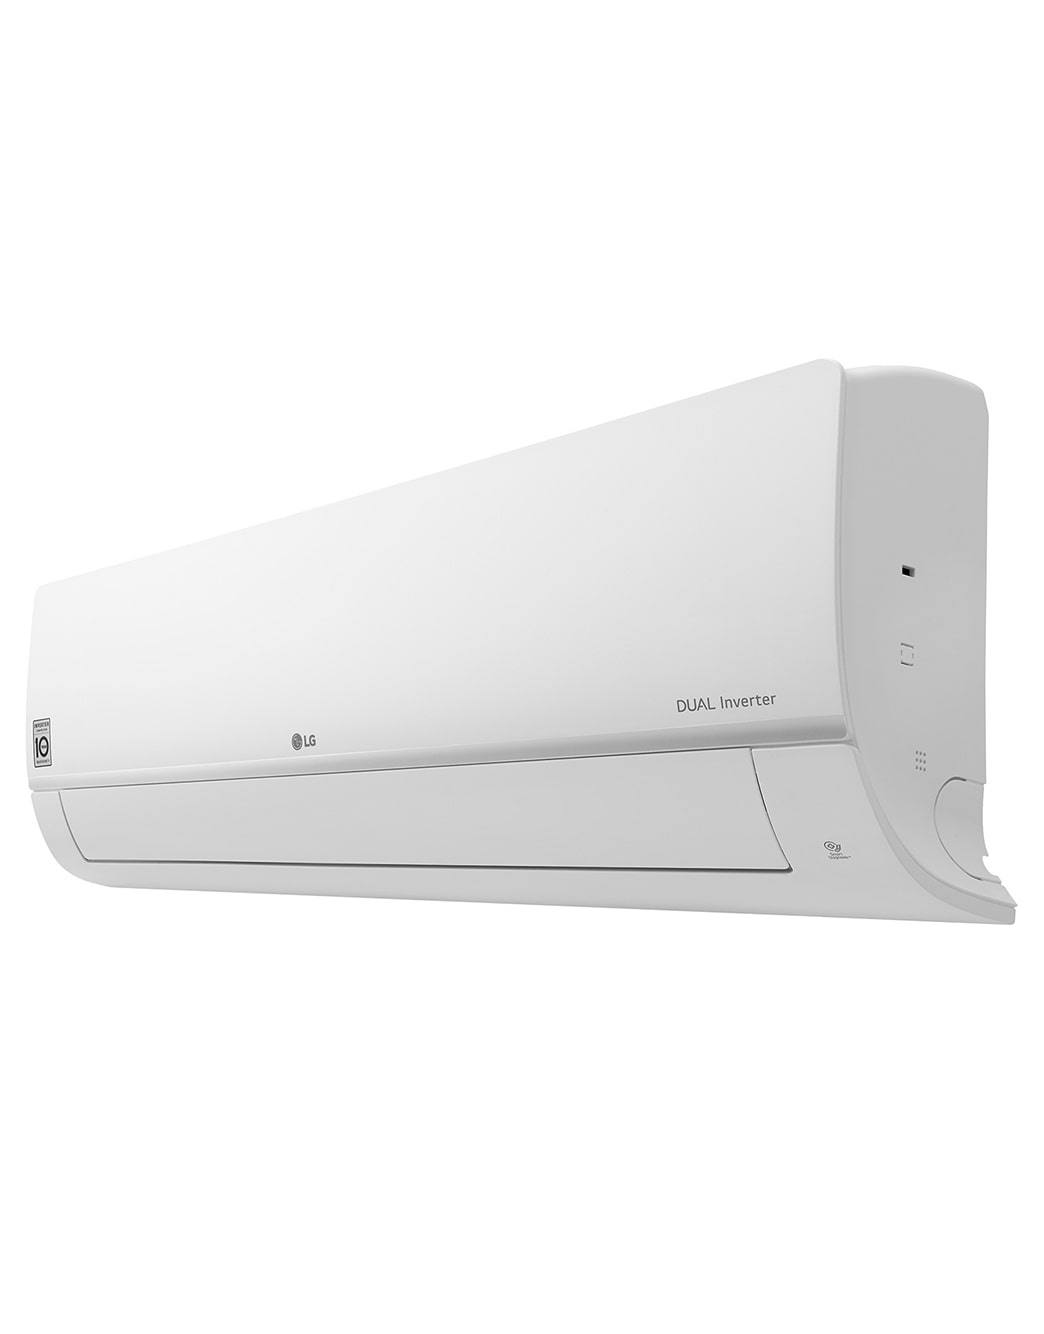 LG Inverter AC, 1 Ton, White Color, Energy Saving & Fast Cooling | LG